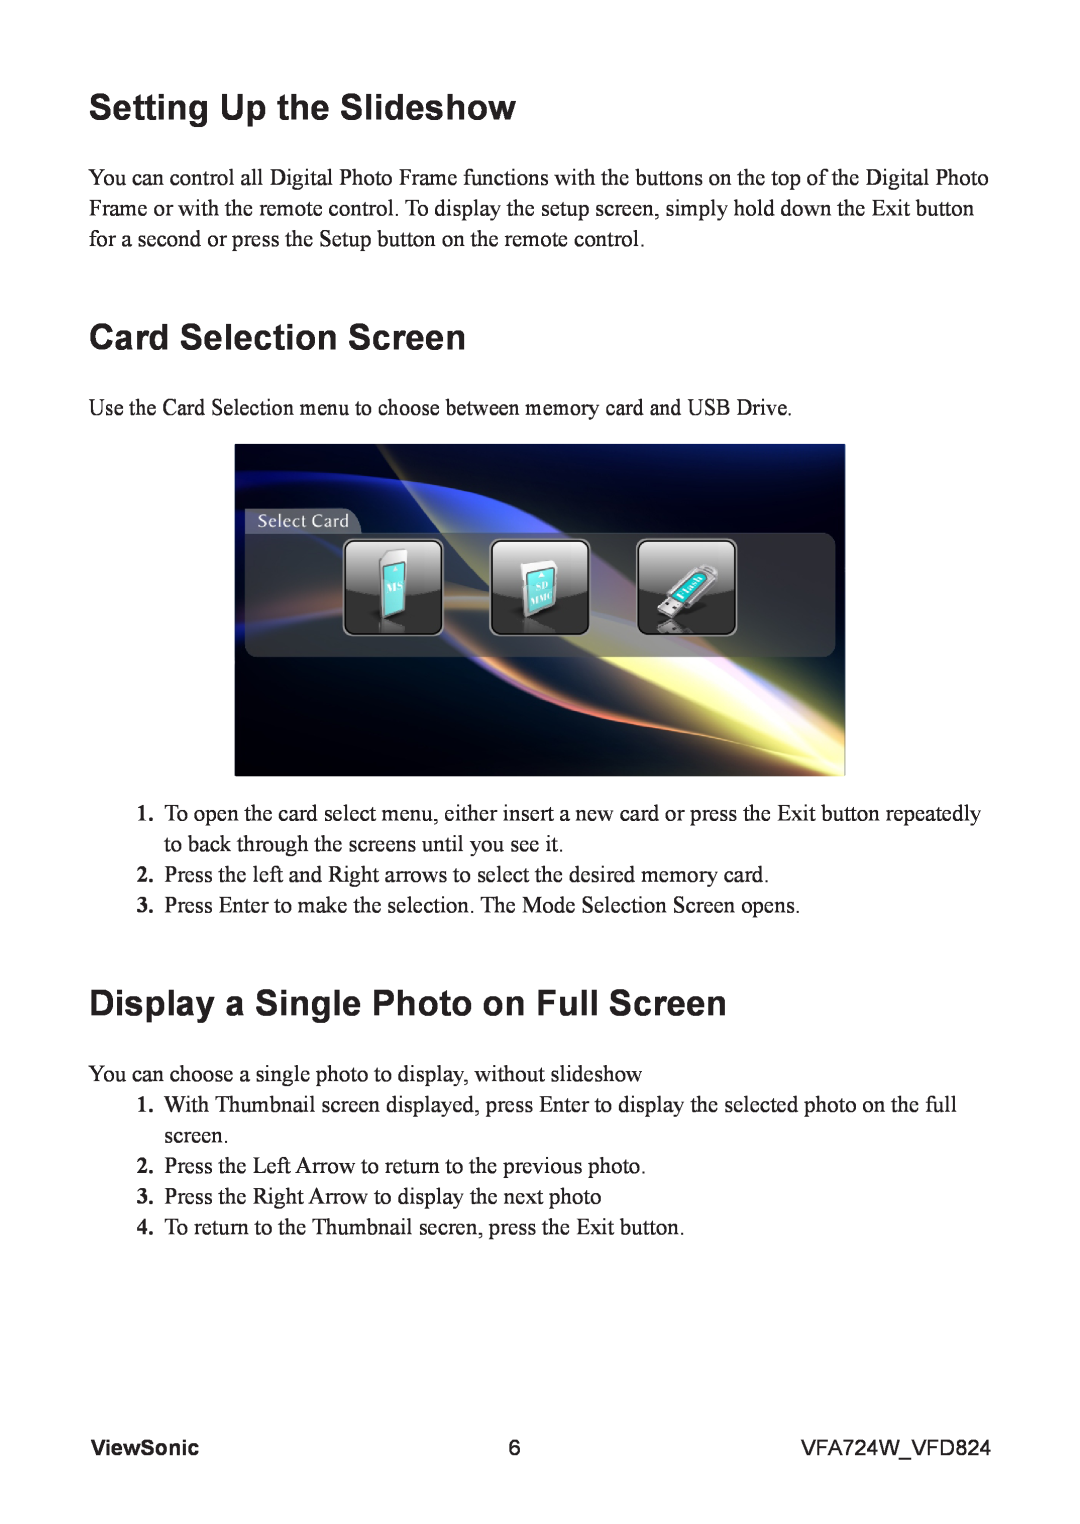 ViewSonic VS13475 manual Setting Up the Slideshow, Card Selection Screen, Display a Single Photo on Full Screen 